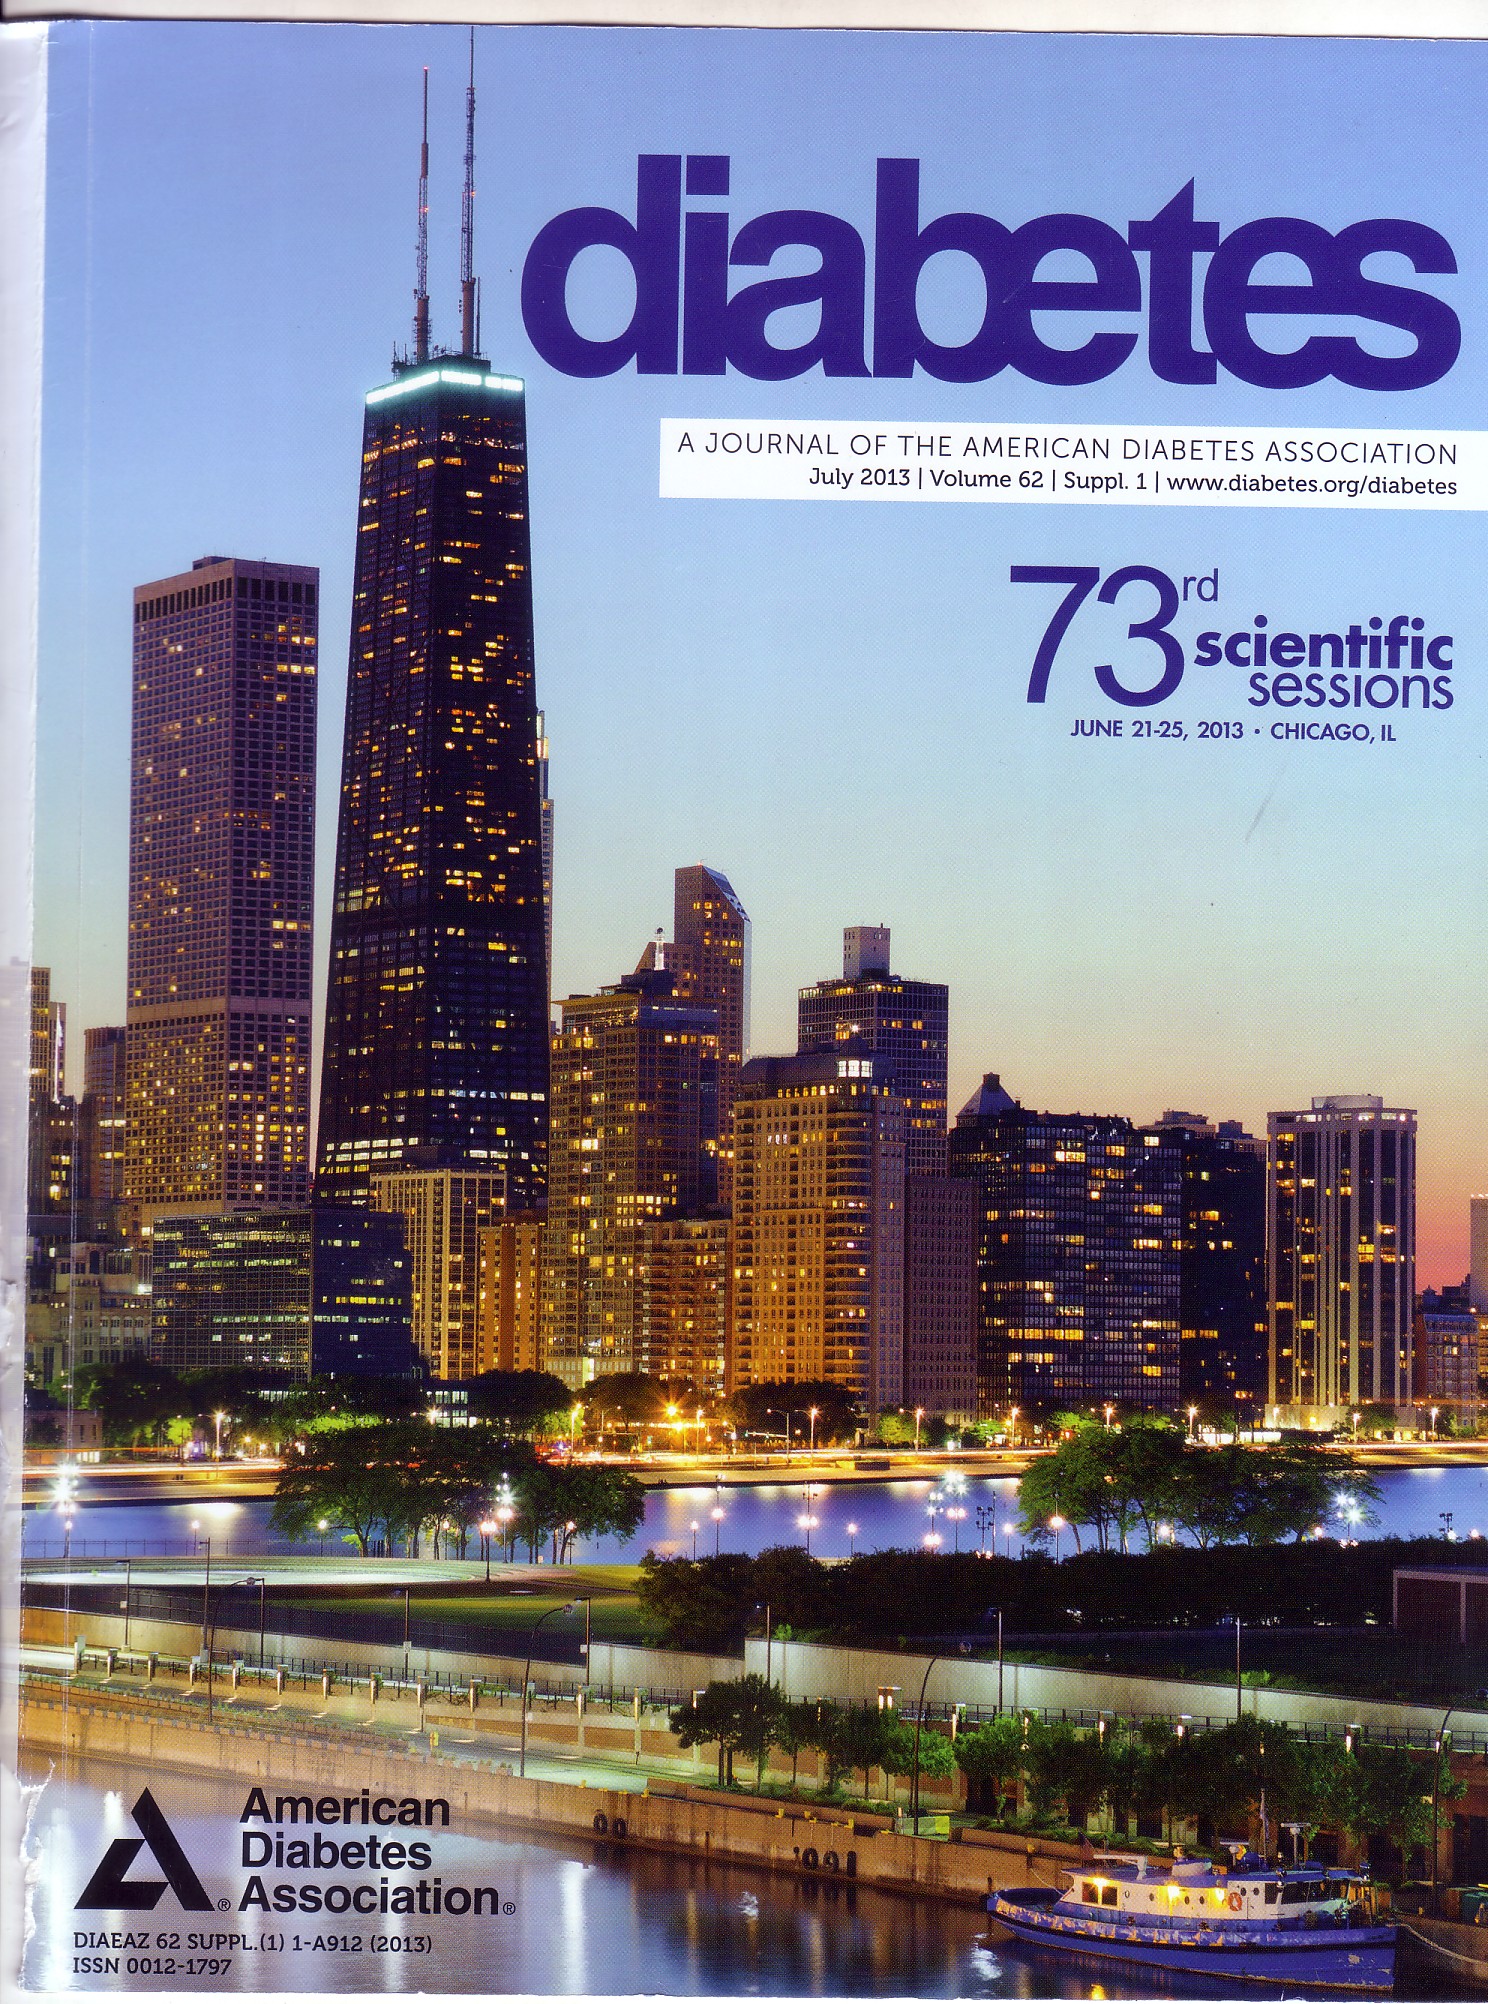 American Diabetes Associations 73rd Scientific Sessions